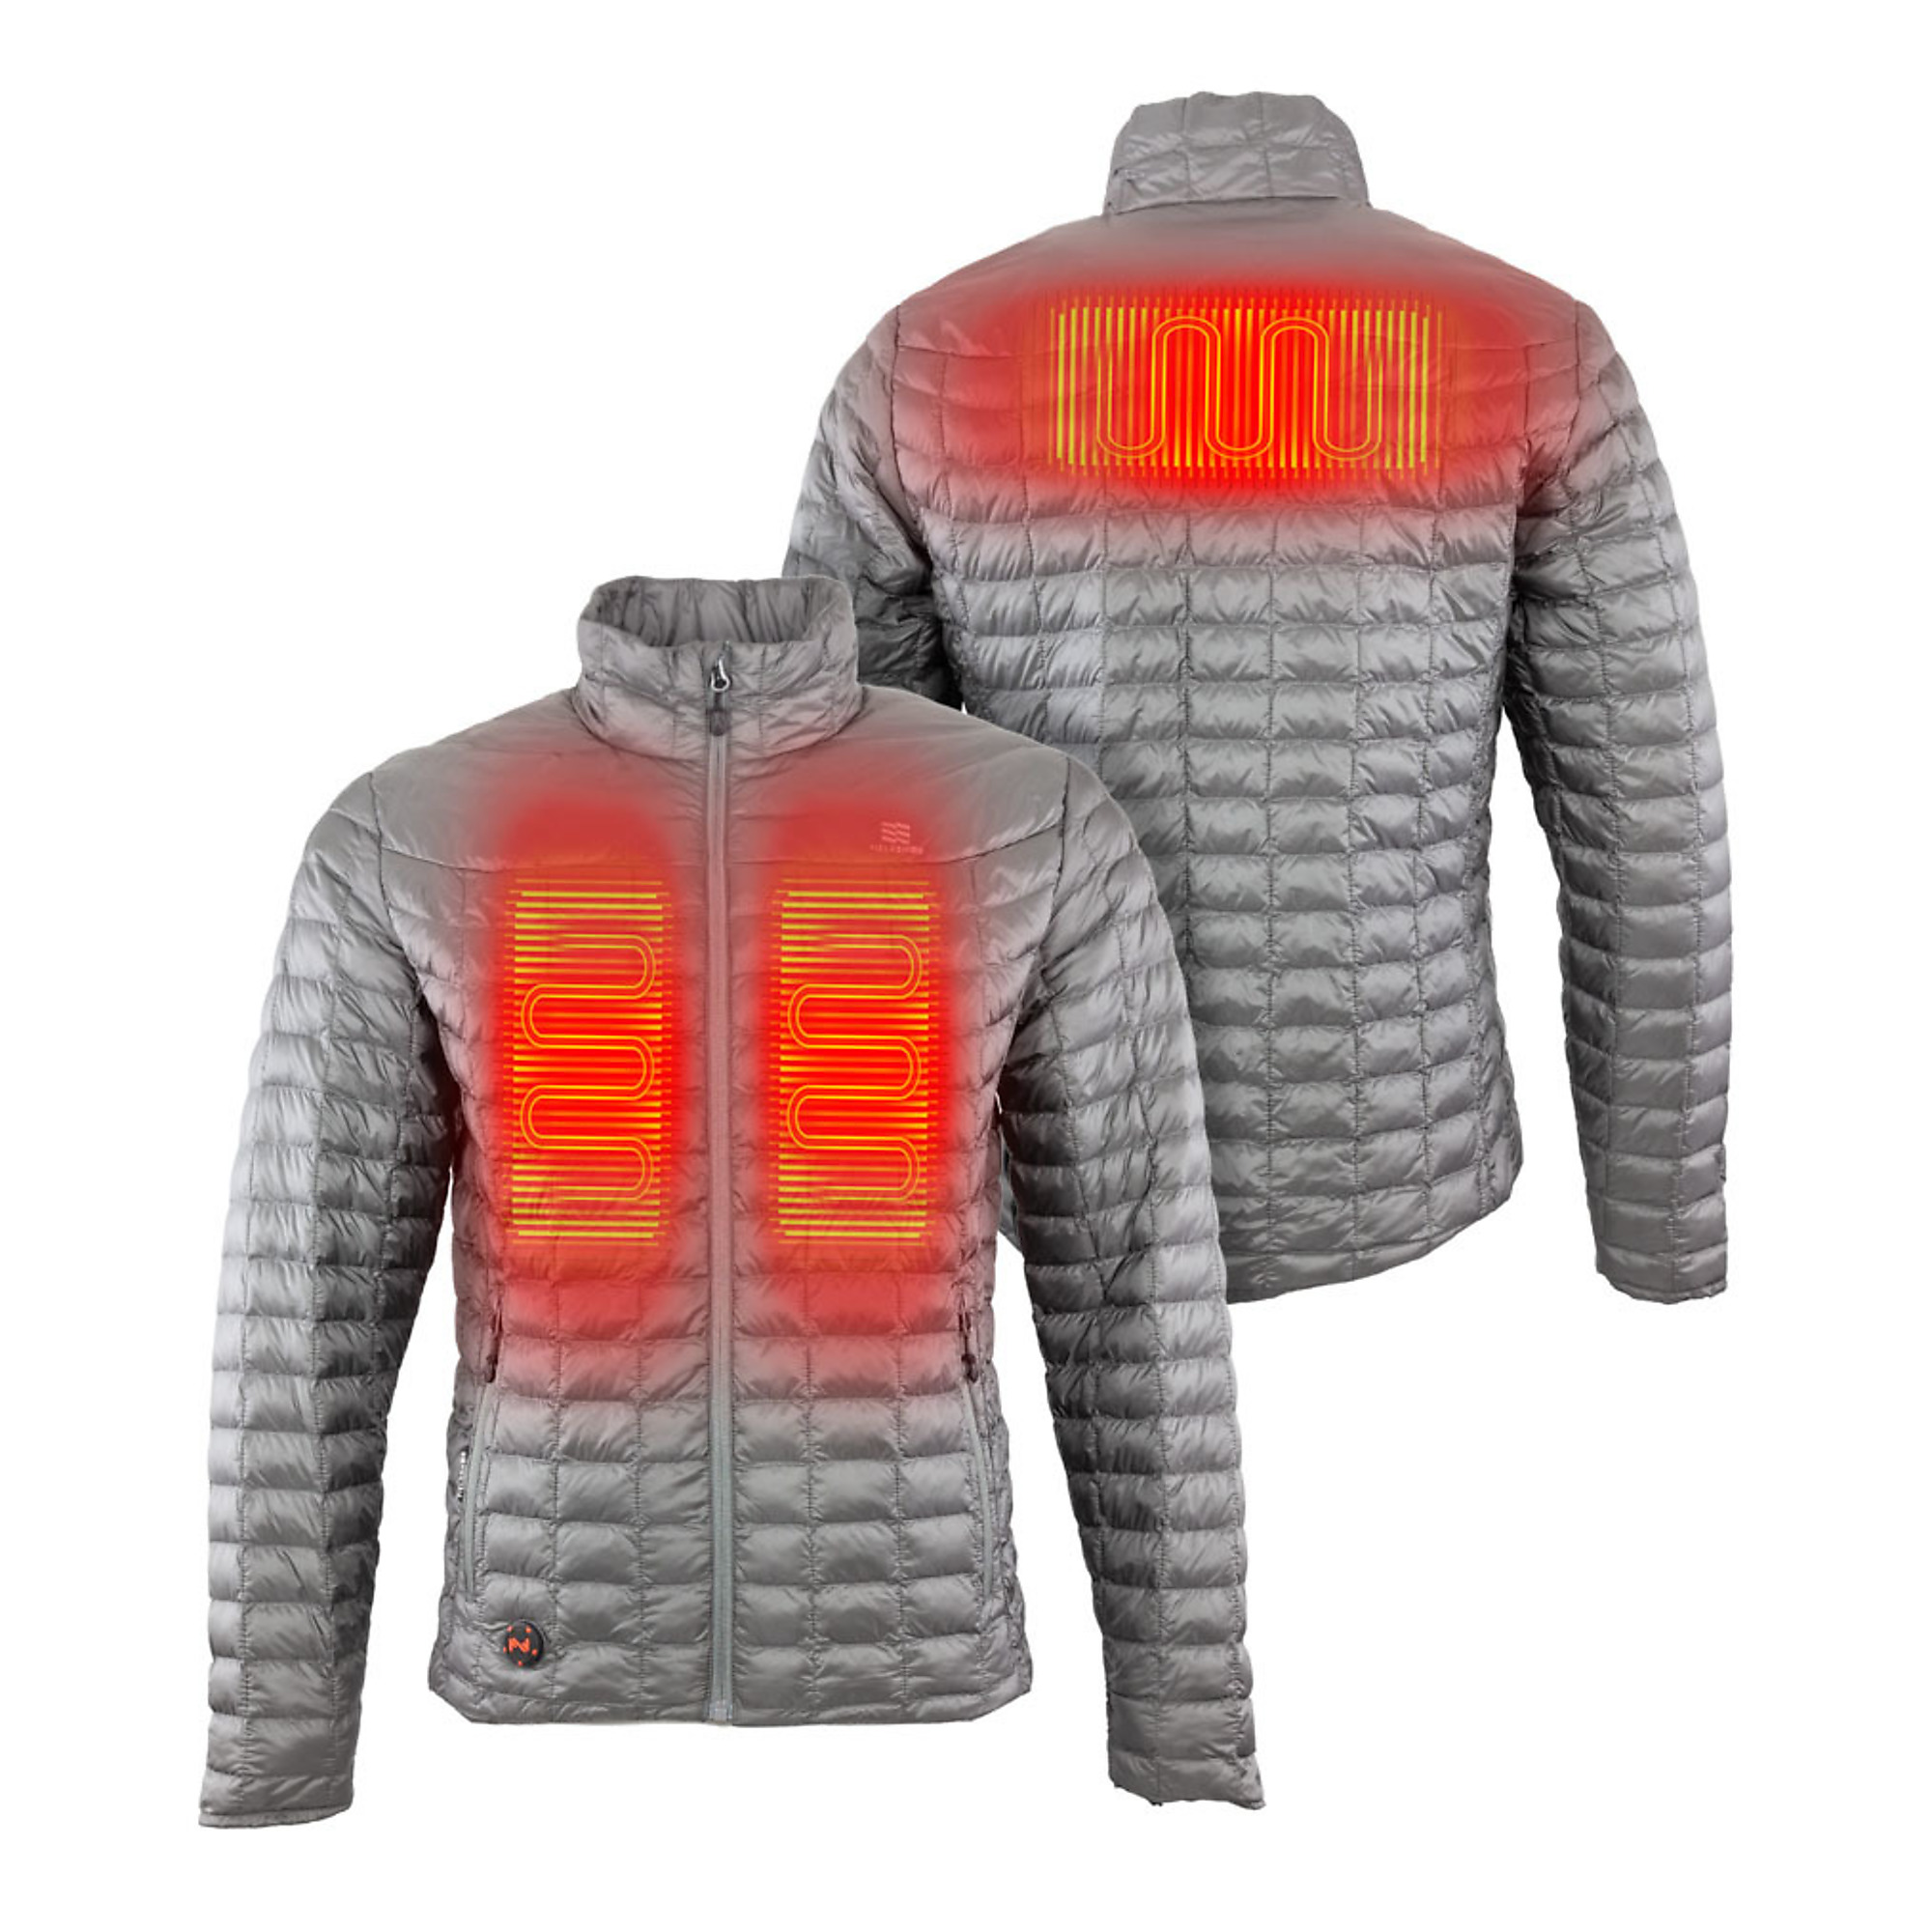 Fieldsheer, Men's Backcountry Heated Jacket with 7.4v Battery, Size 3XL, Color Grey, Model MWMJ04320720